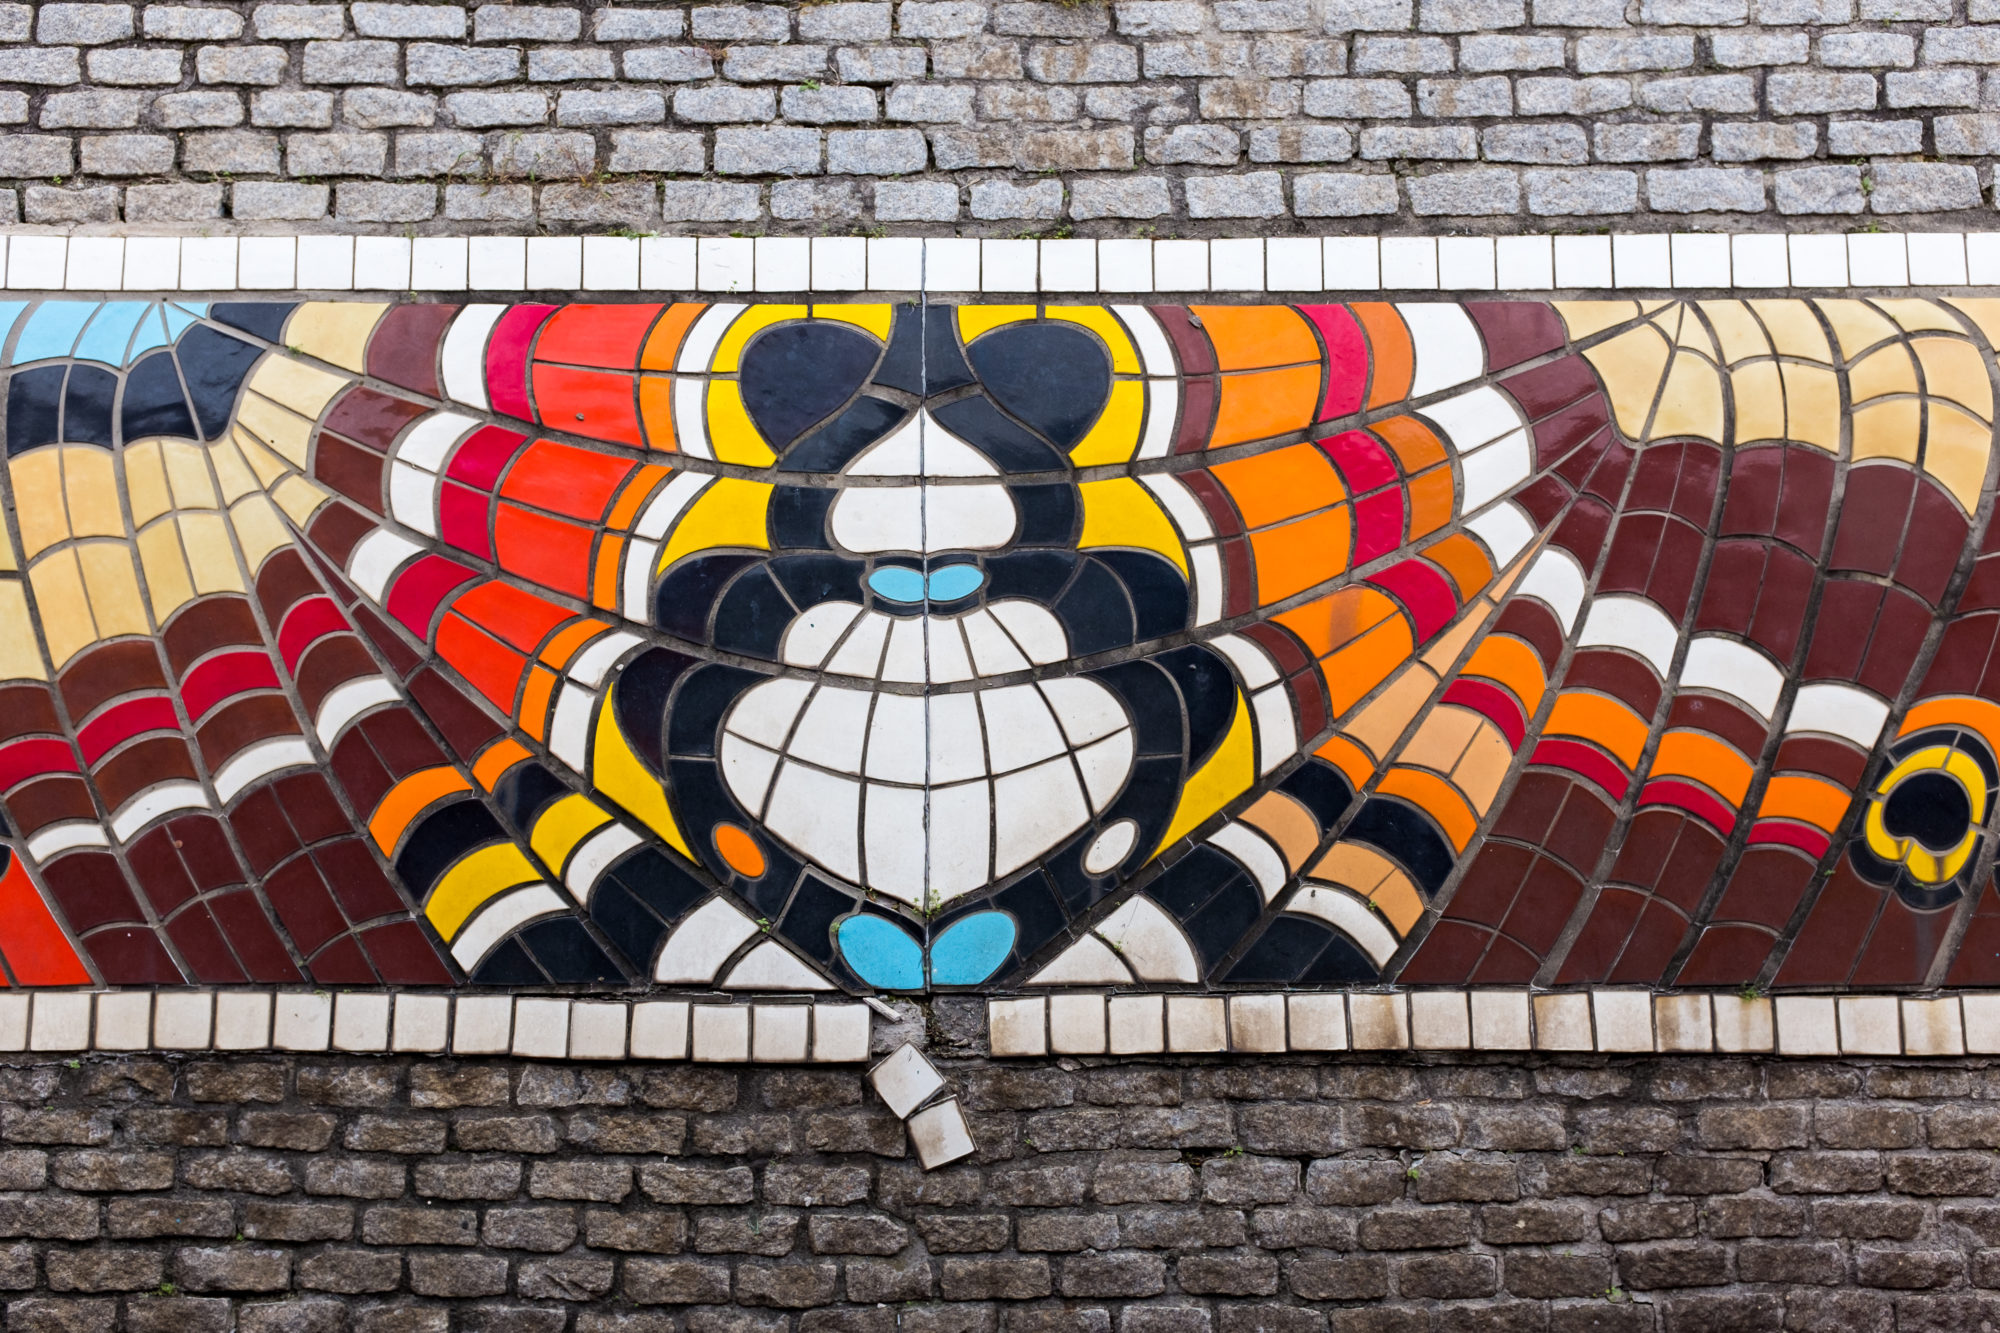 A colorful tile mural on cobblestone